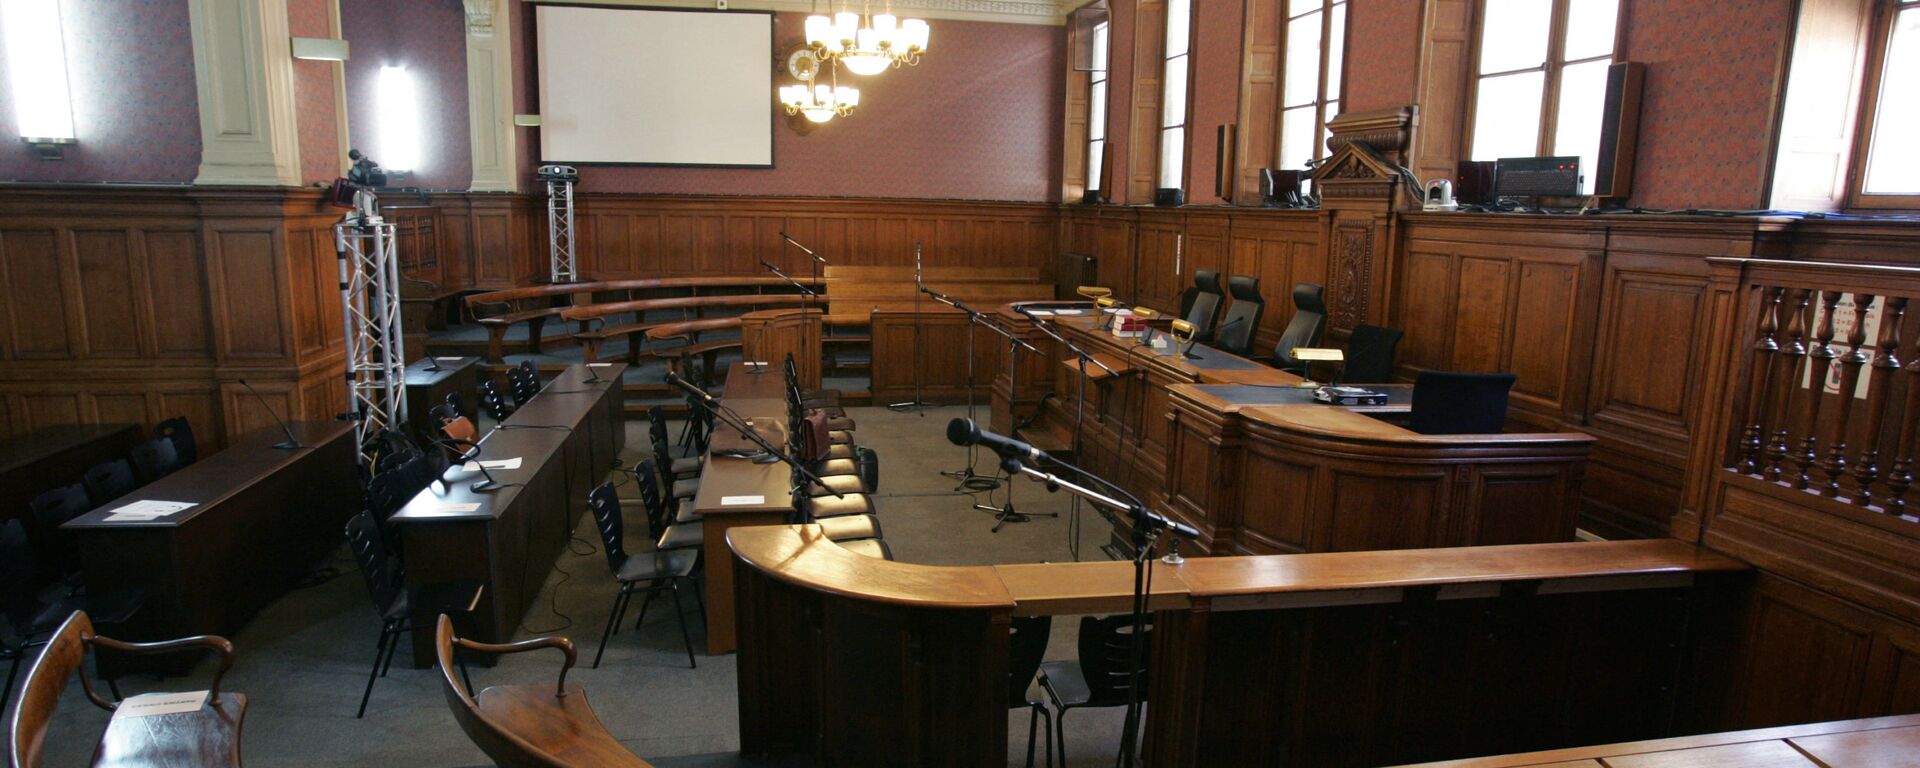 Зал заседания суда, фото из архива - Sputnik Azərbaycan, 1920, 24.05.2021